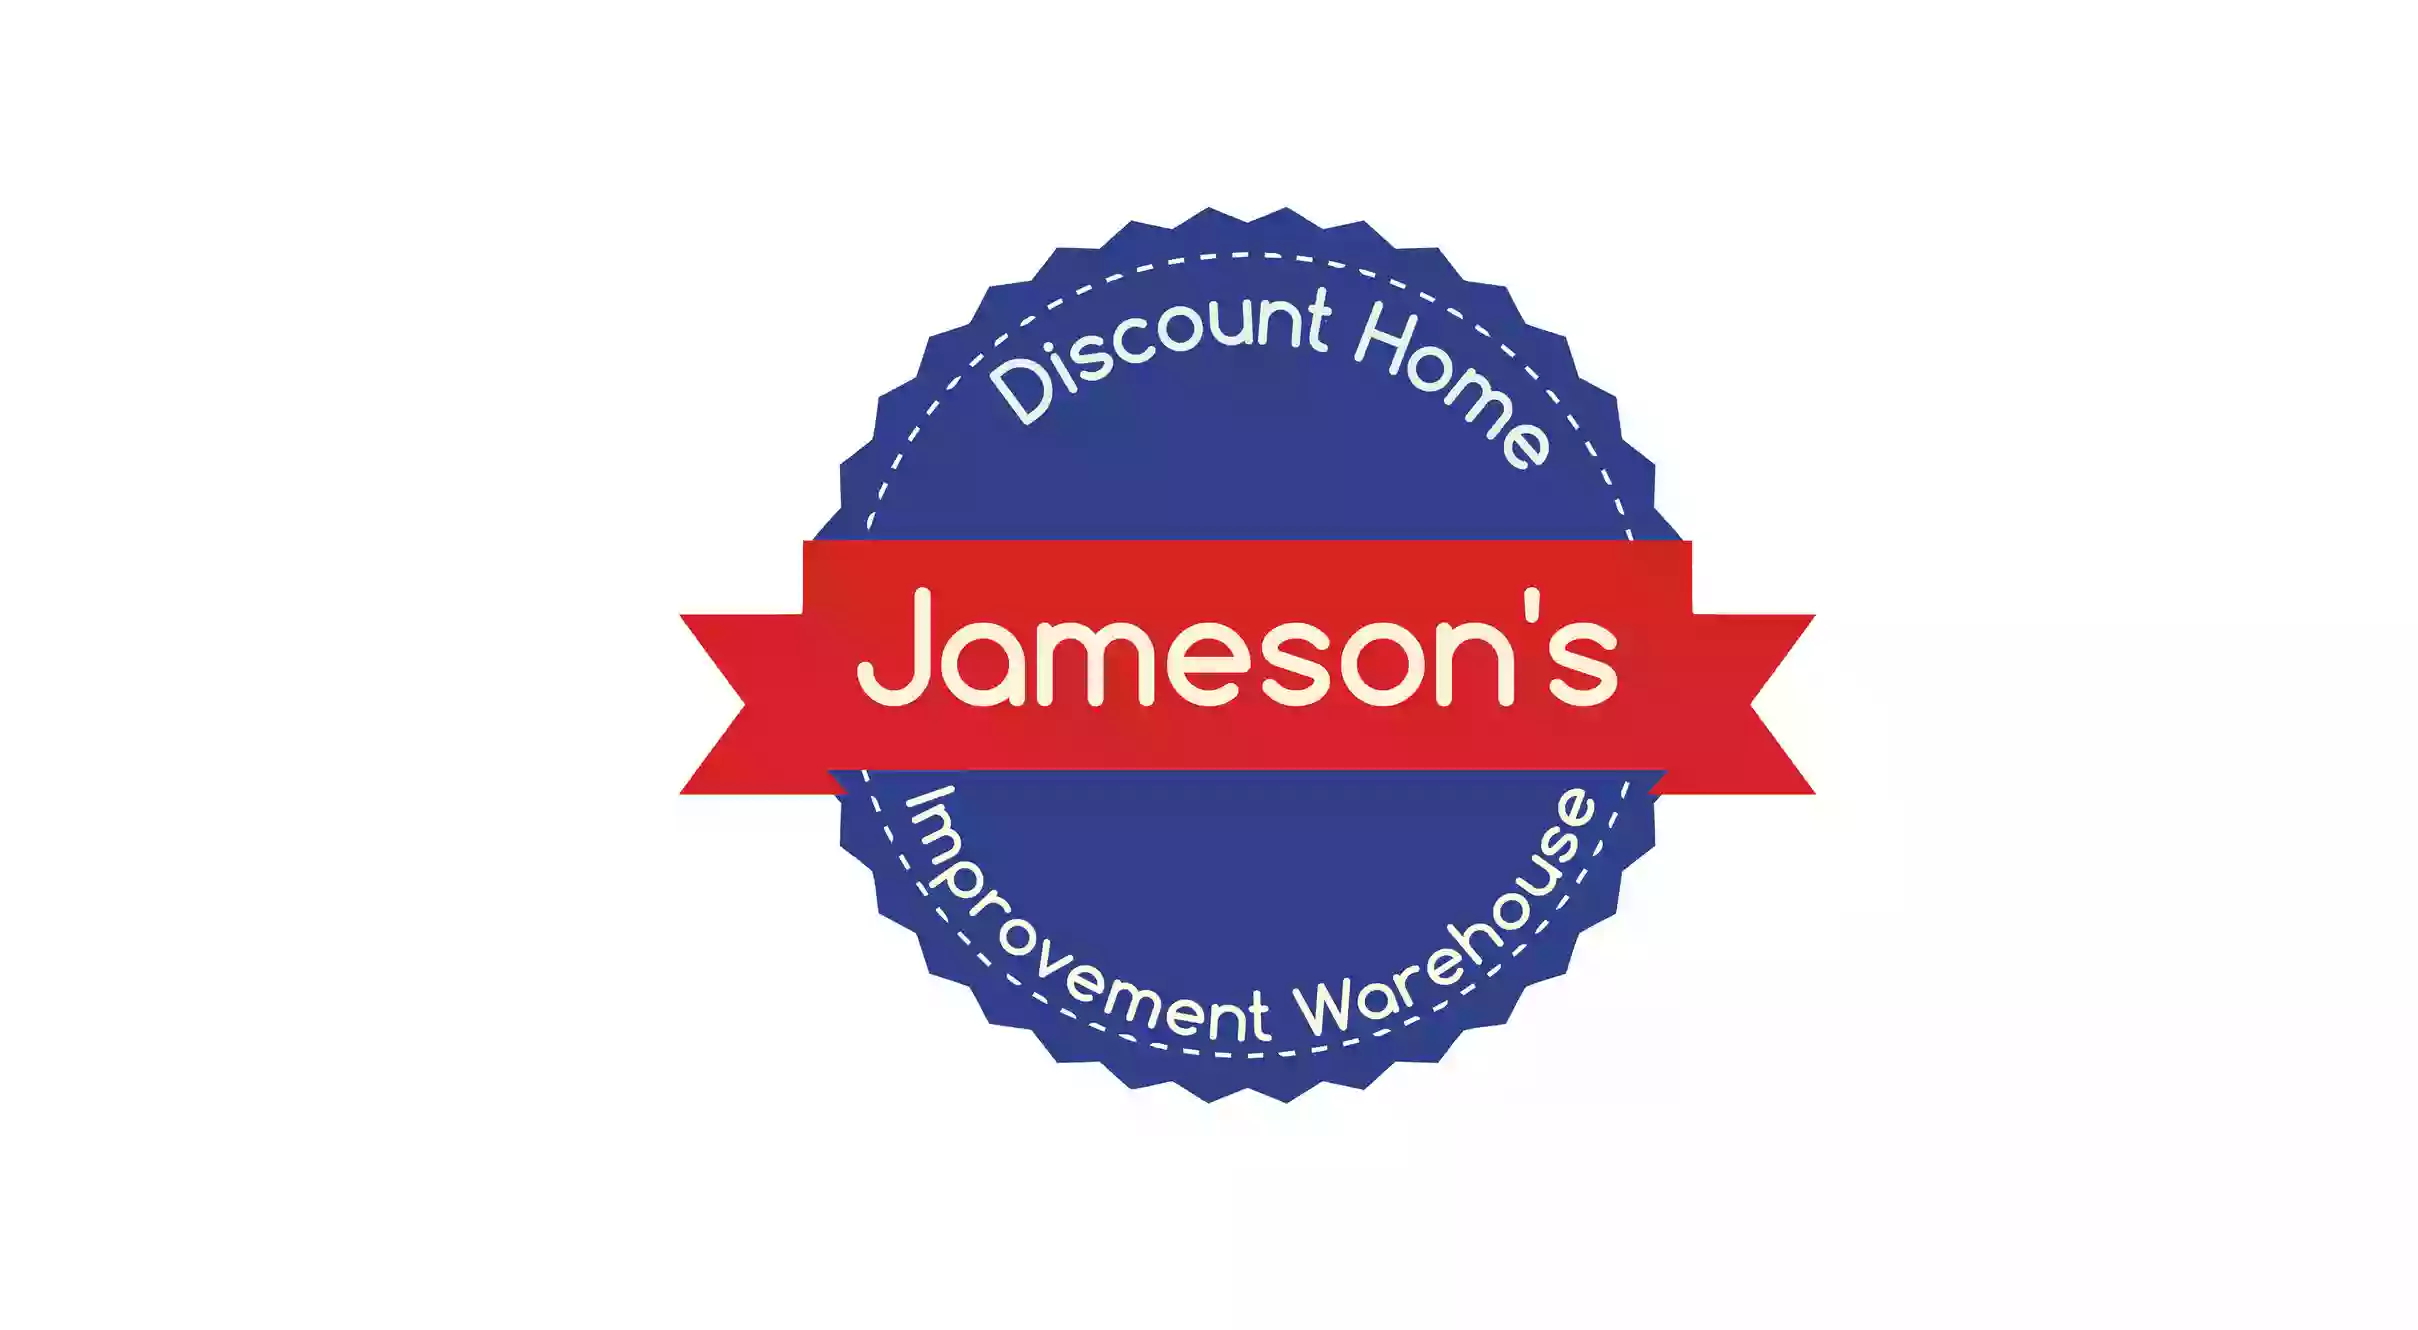 Jameson's Discount Home Improvement Warehouse